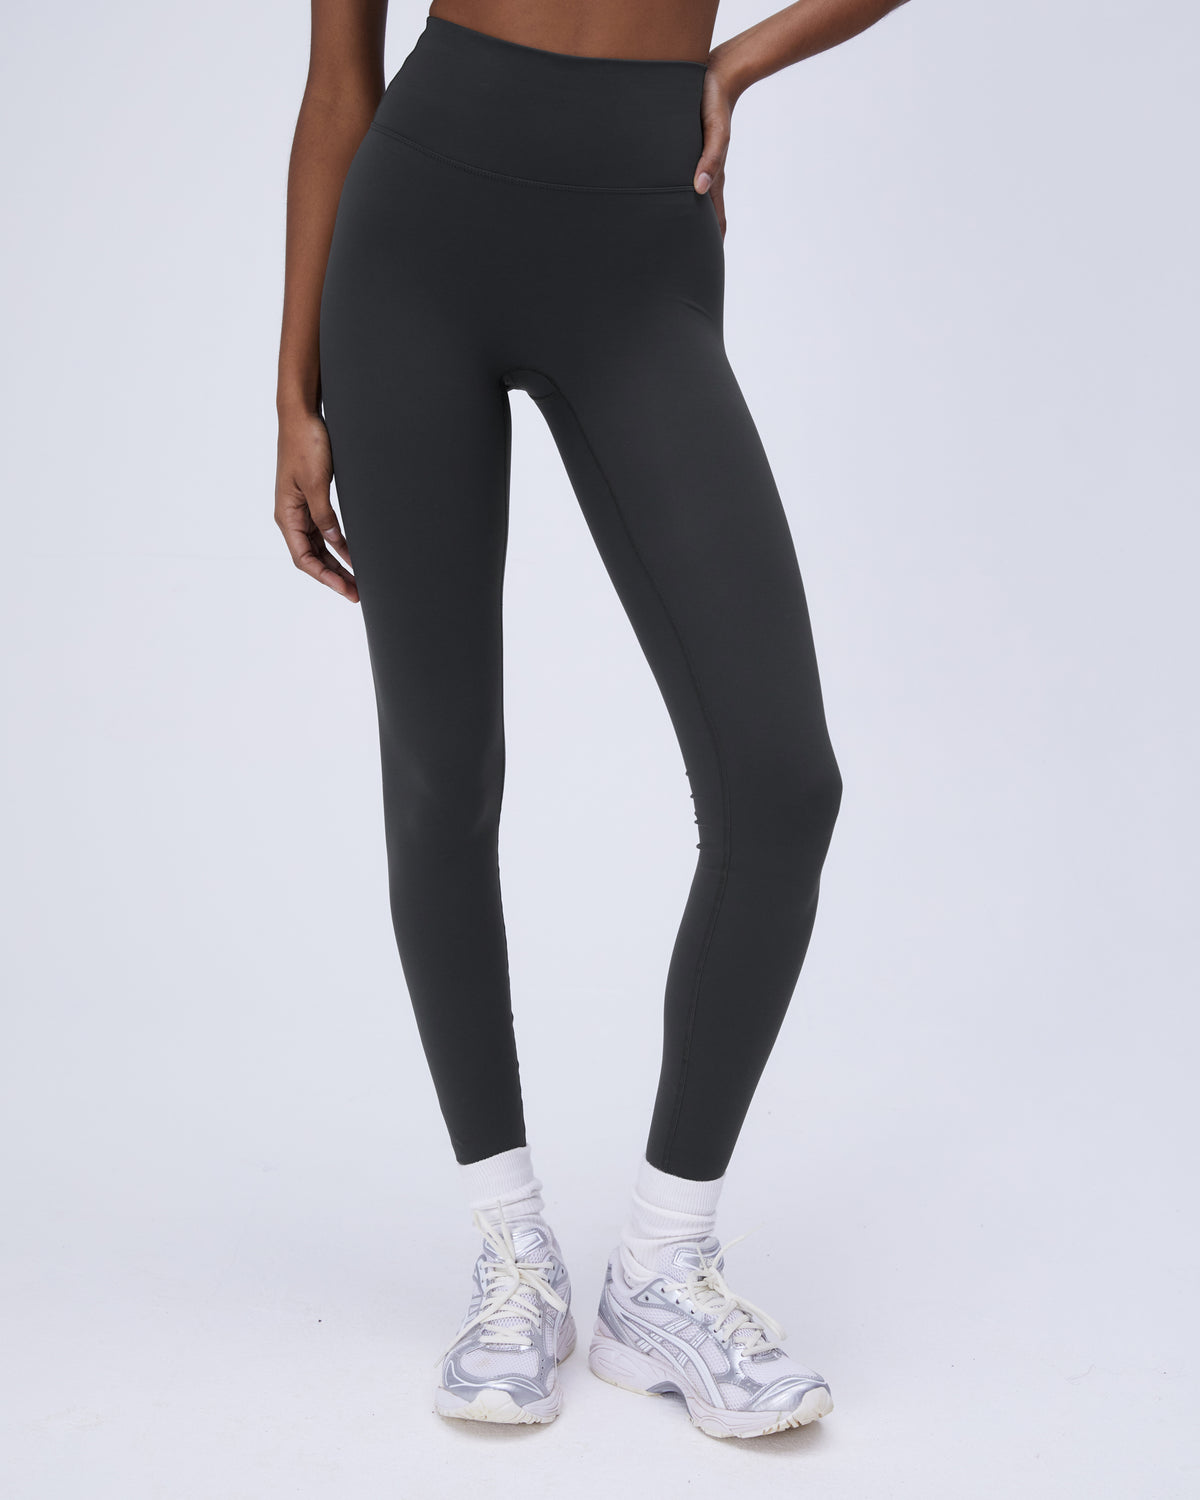 Women's Ultimate Pocket Leggings - Graphite Grey